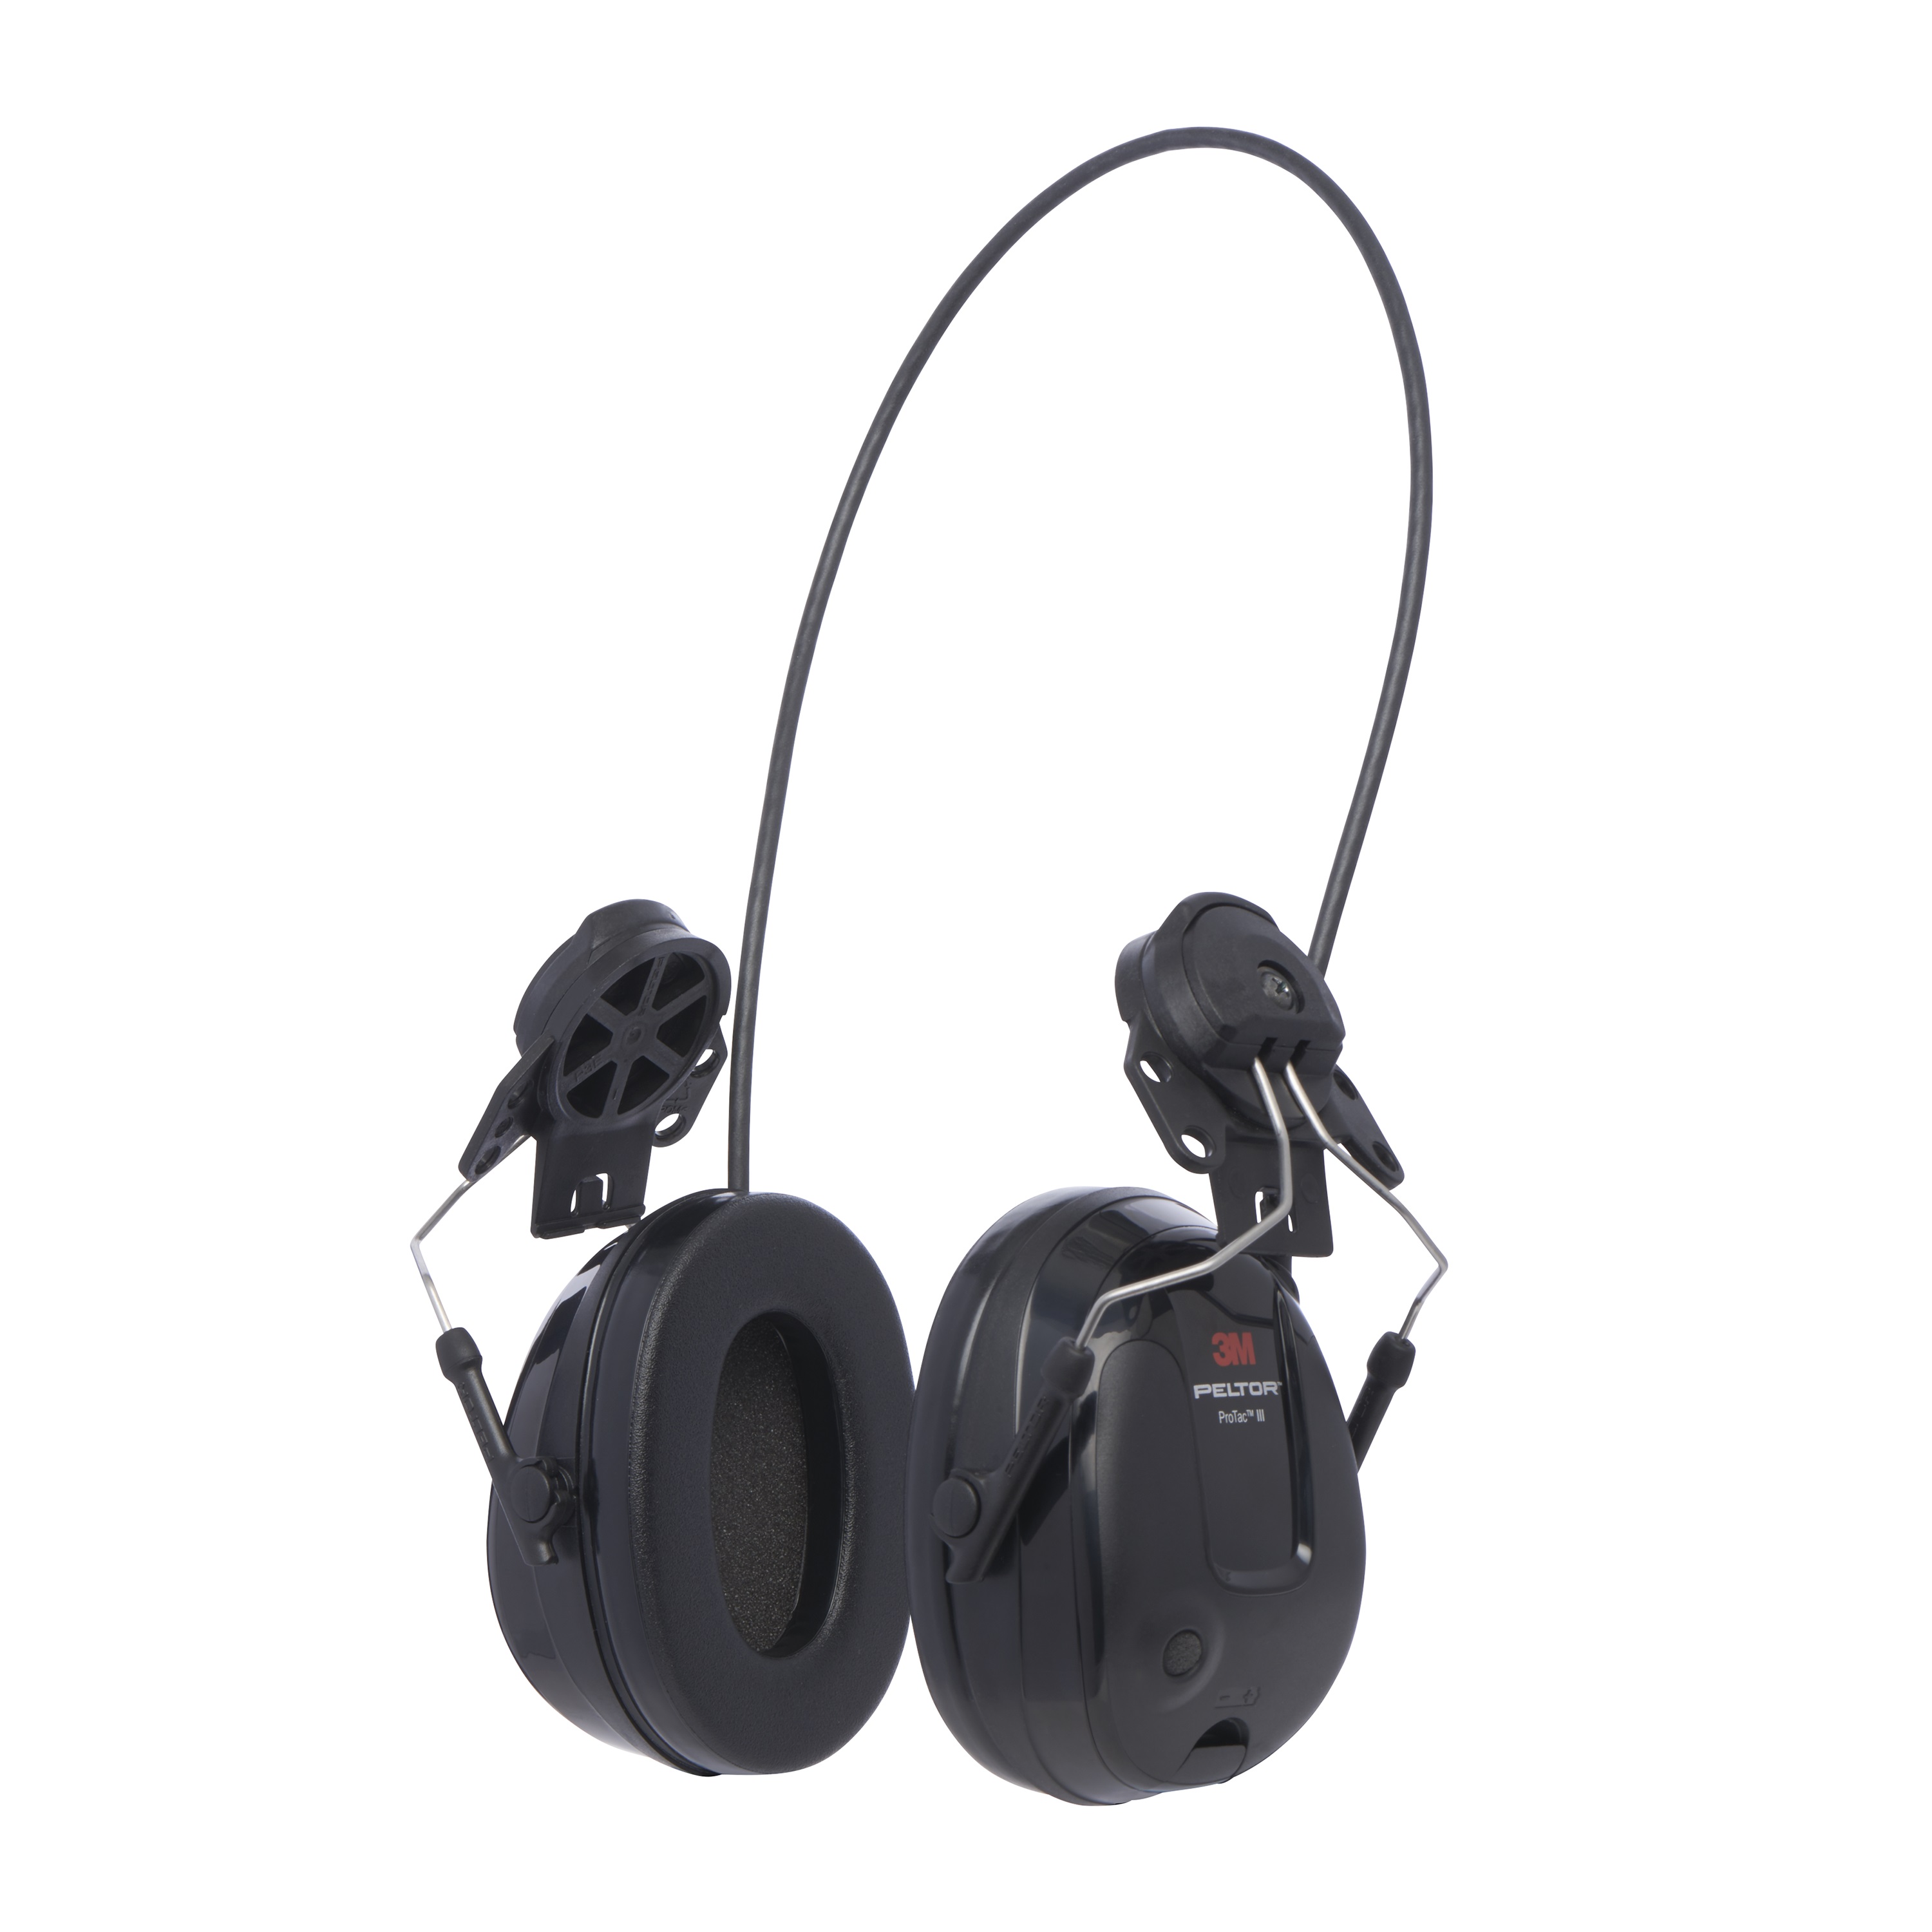 3M™ PELTOR™ ProTac™ III Headset, 25 dB, schlanke Schalen, schwarz, Befestigung am Schutzhelm, MT13H220P3E